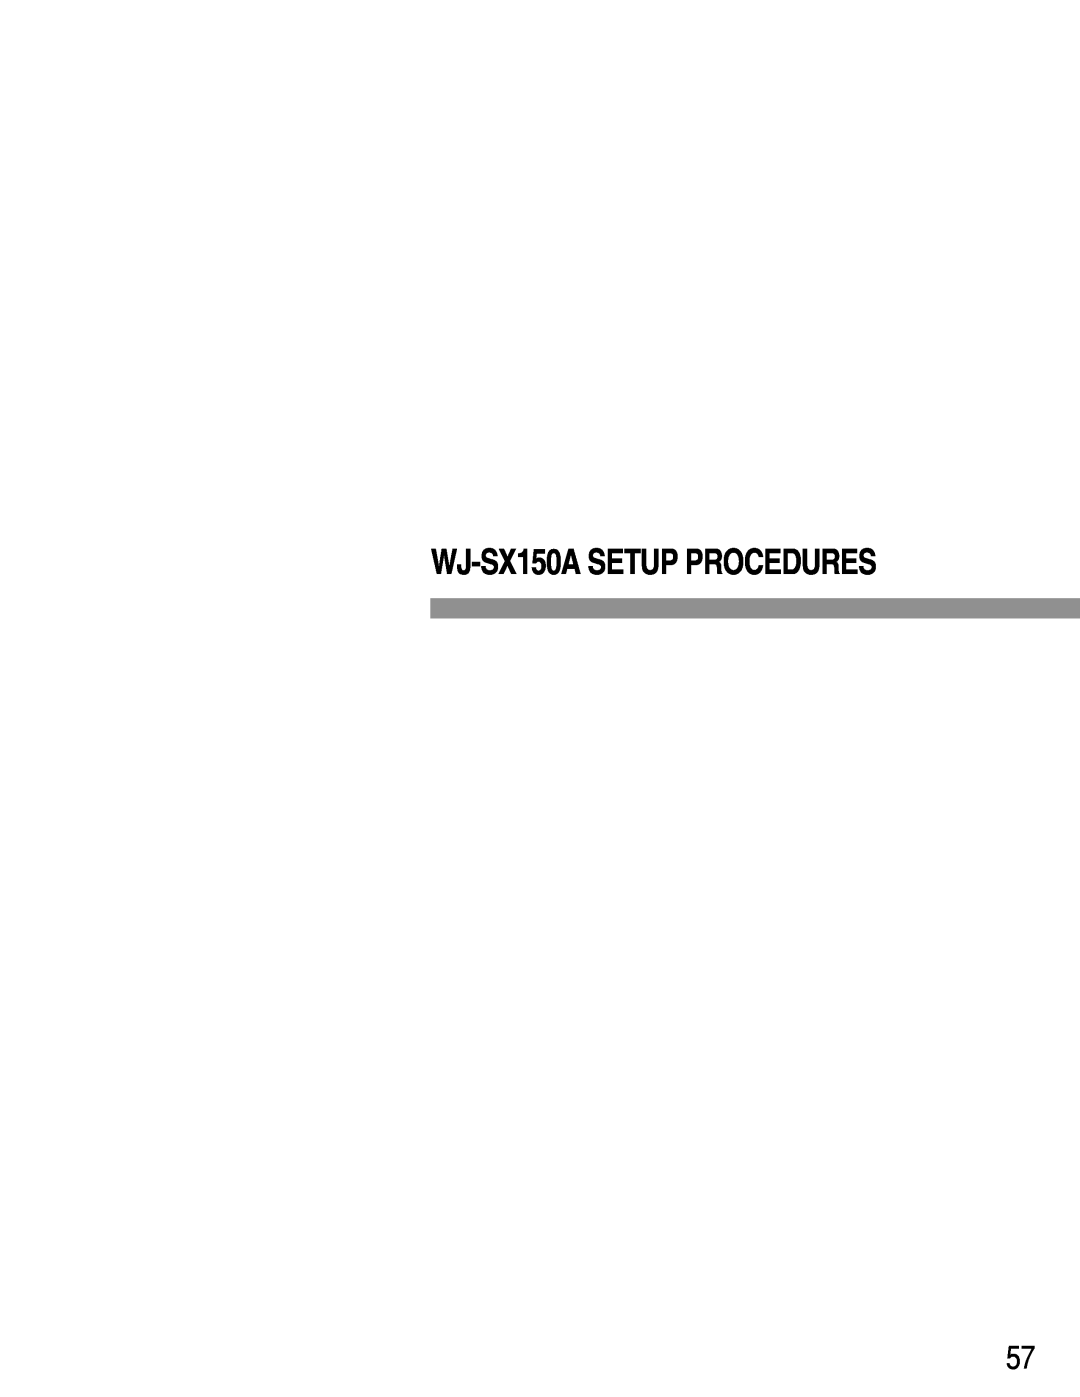 Panasonic manual WJ-SX150A SETUP PROCEDURES 